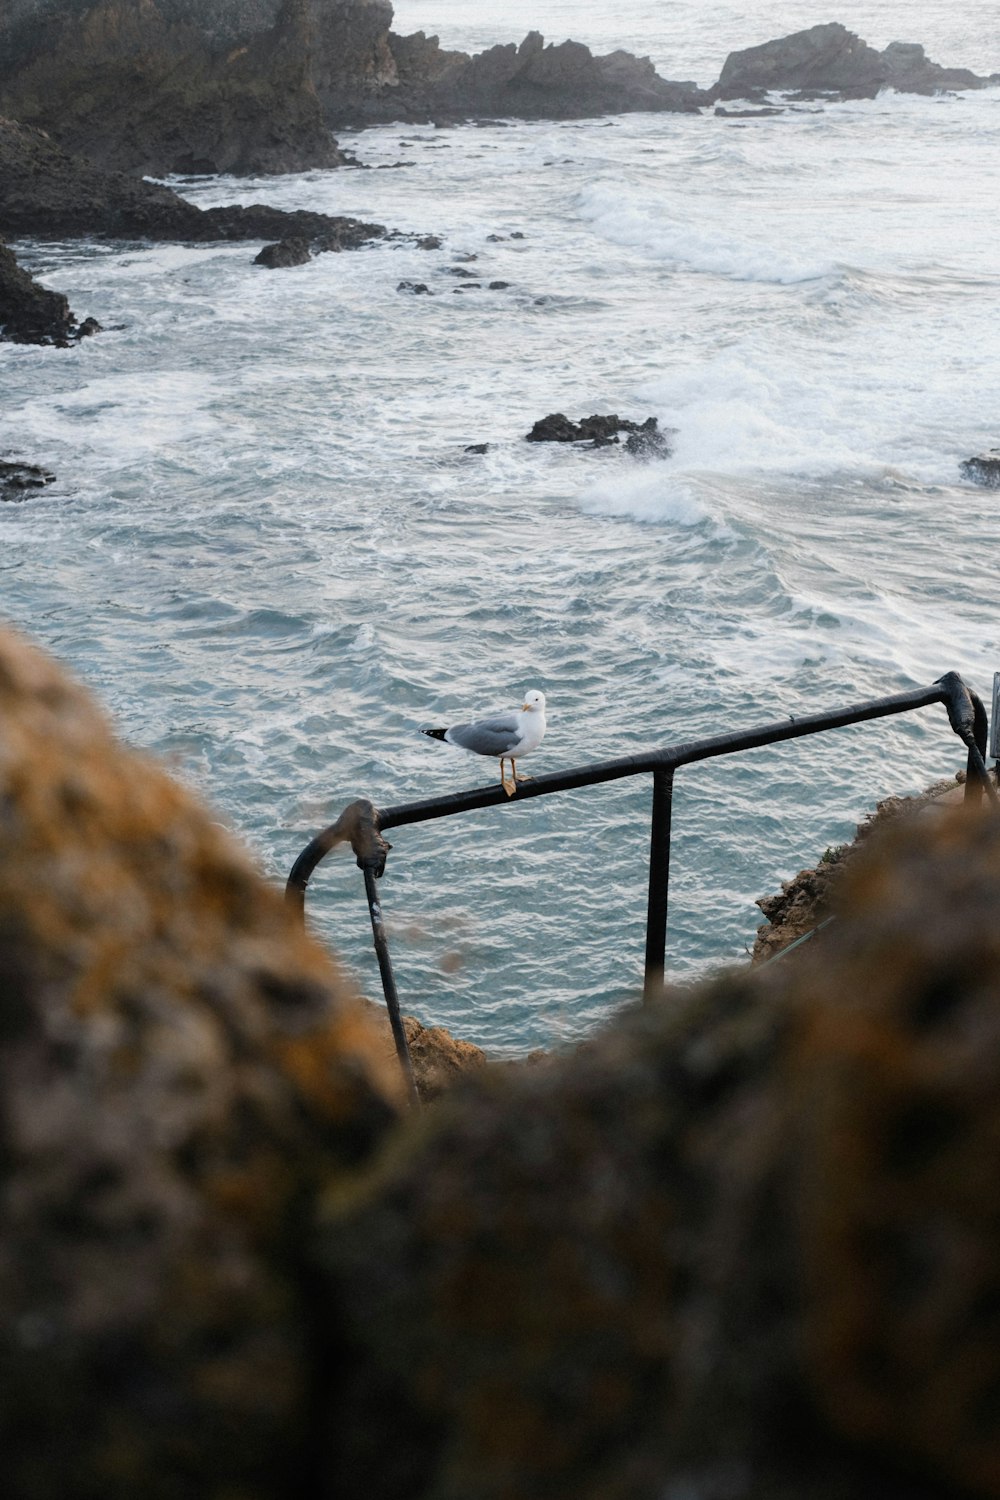 two seagulls sitting on a railing near the ocean